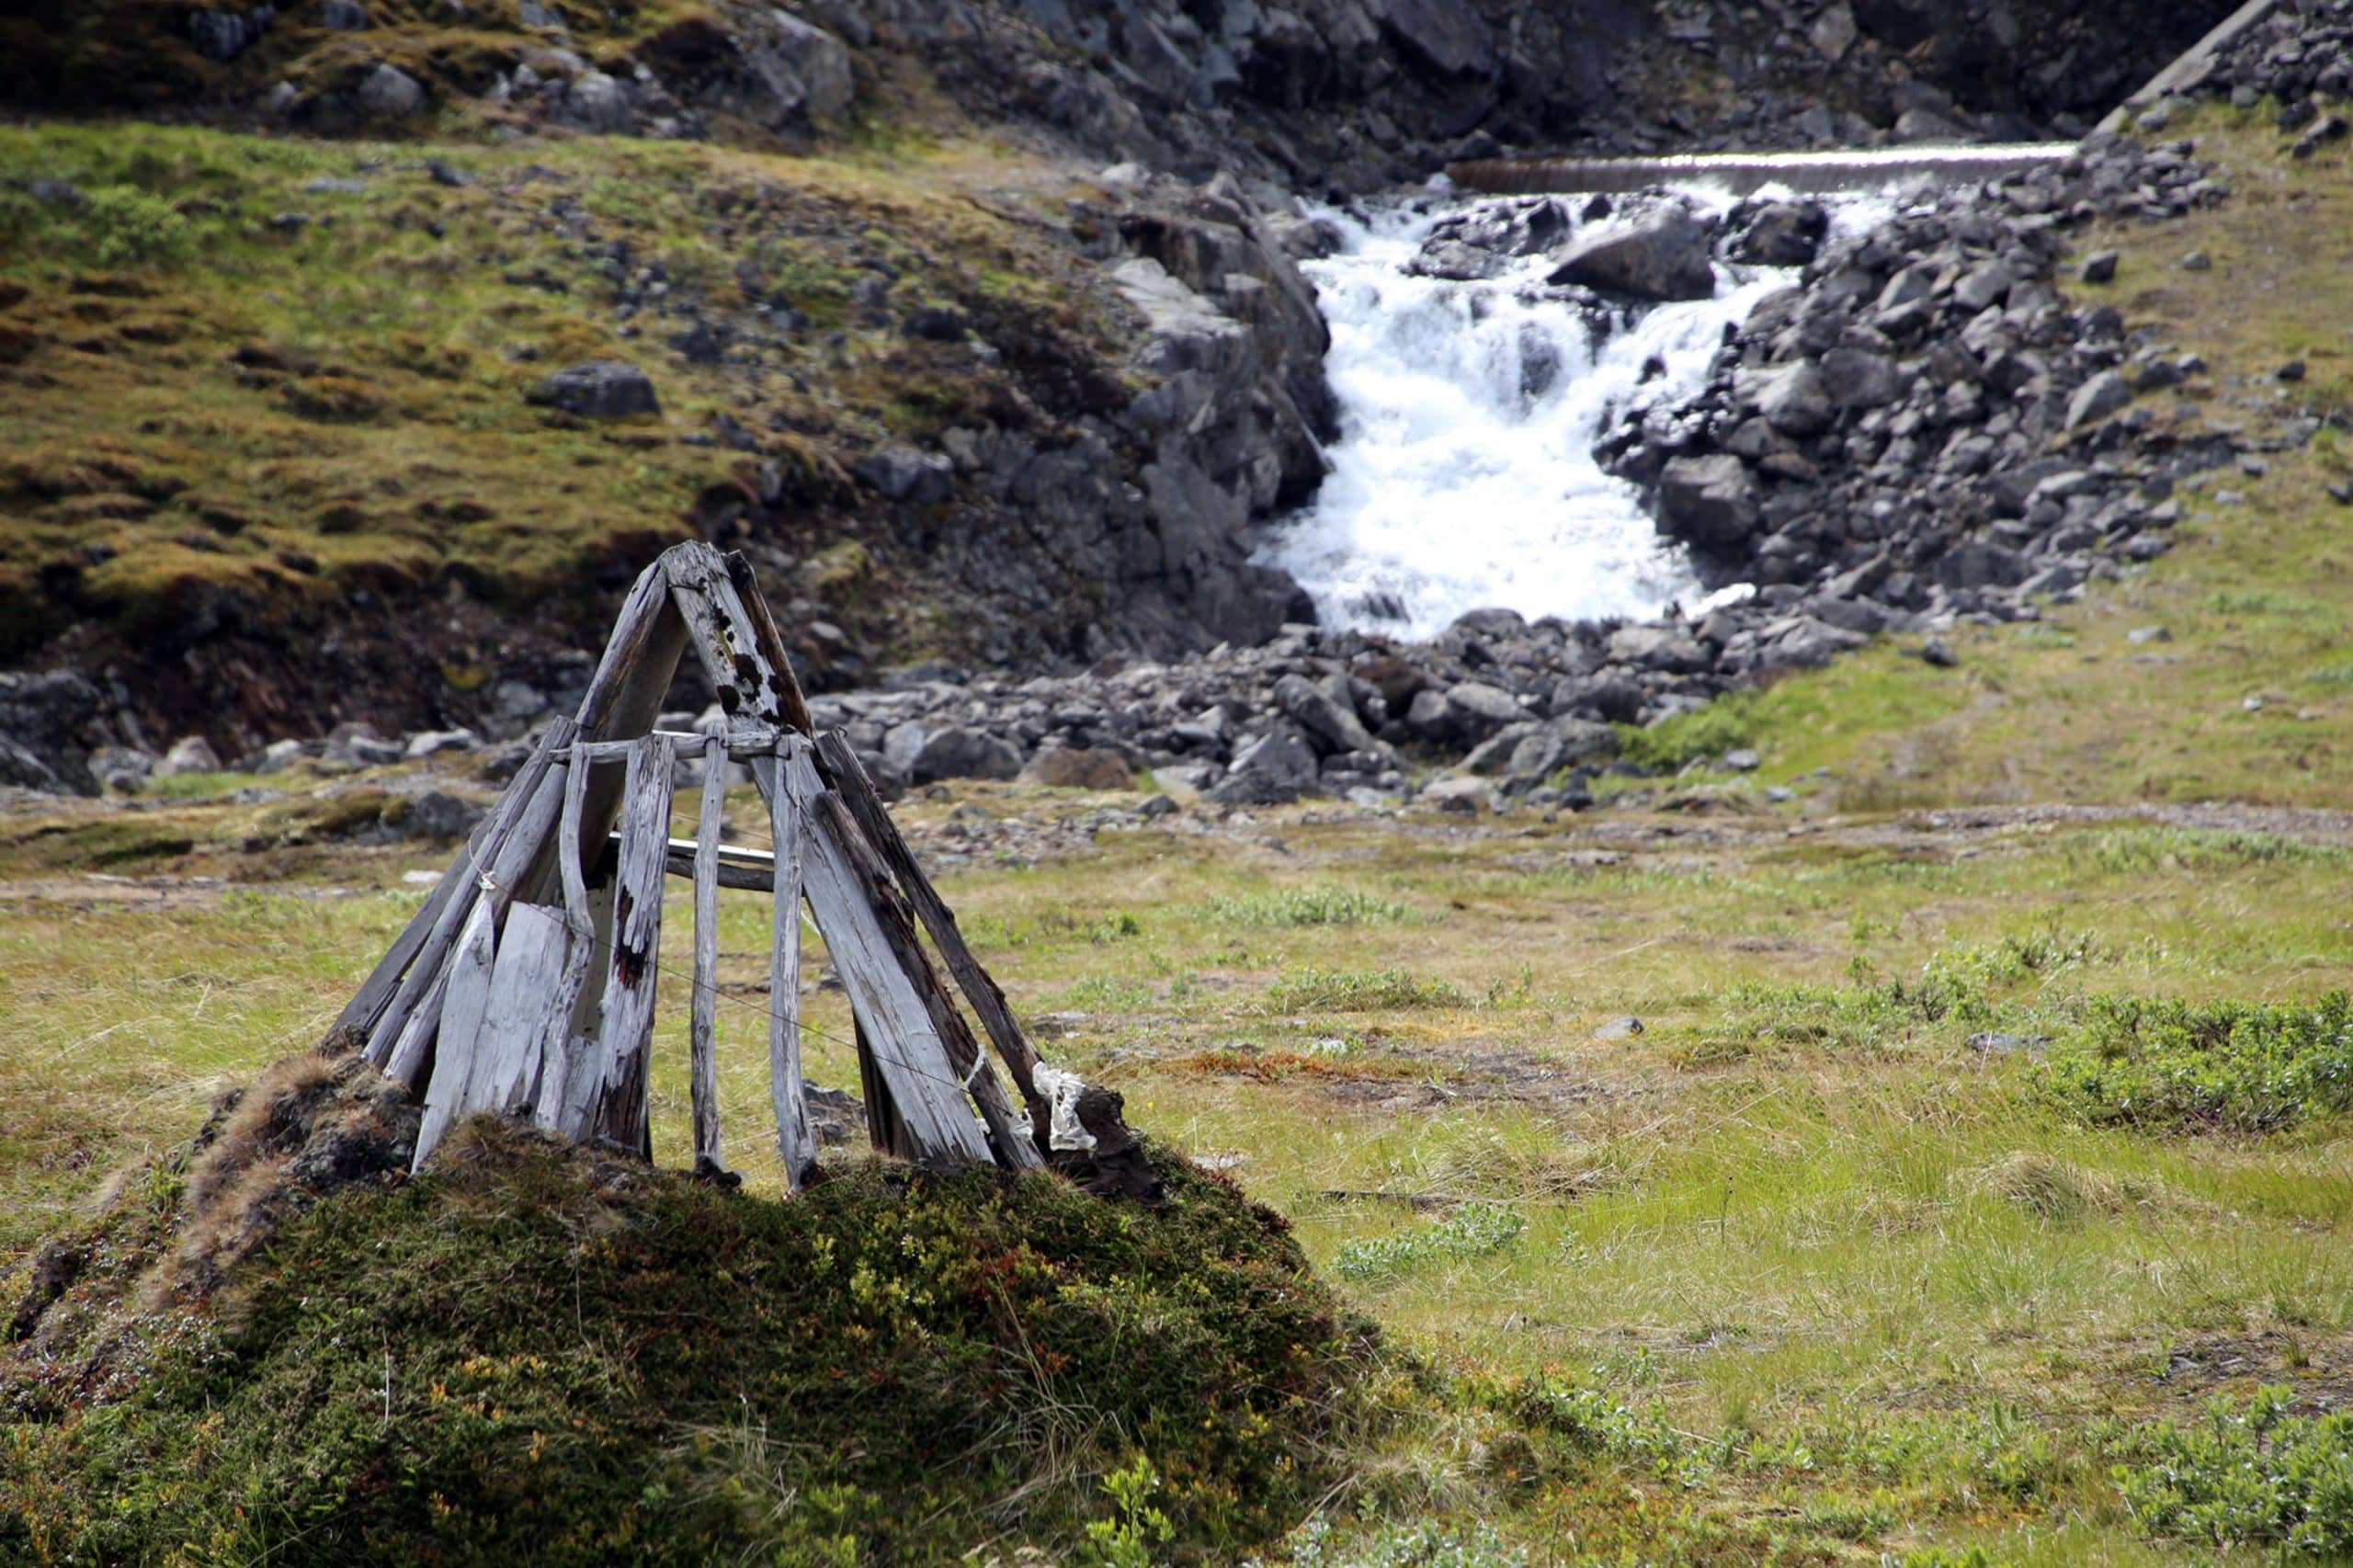 Wodden Sami hut skeleton in Finnmark, Norway, with falling river in the back